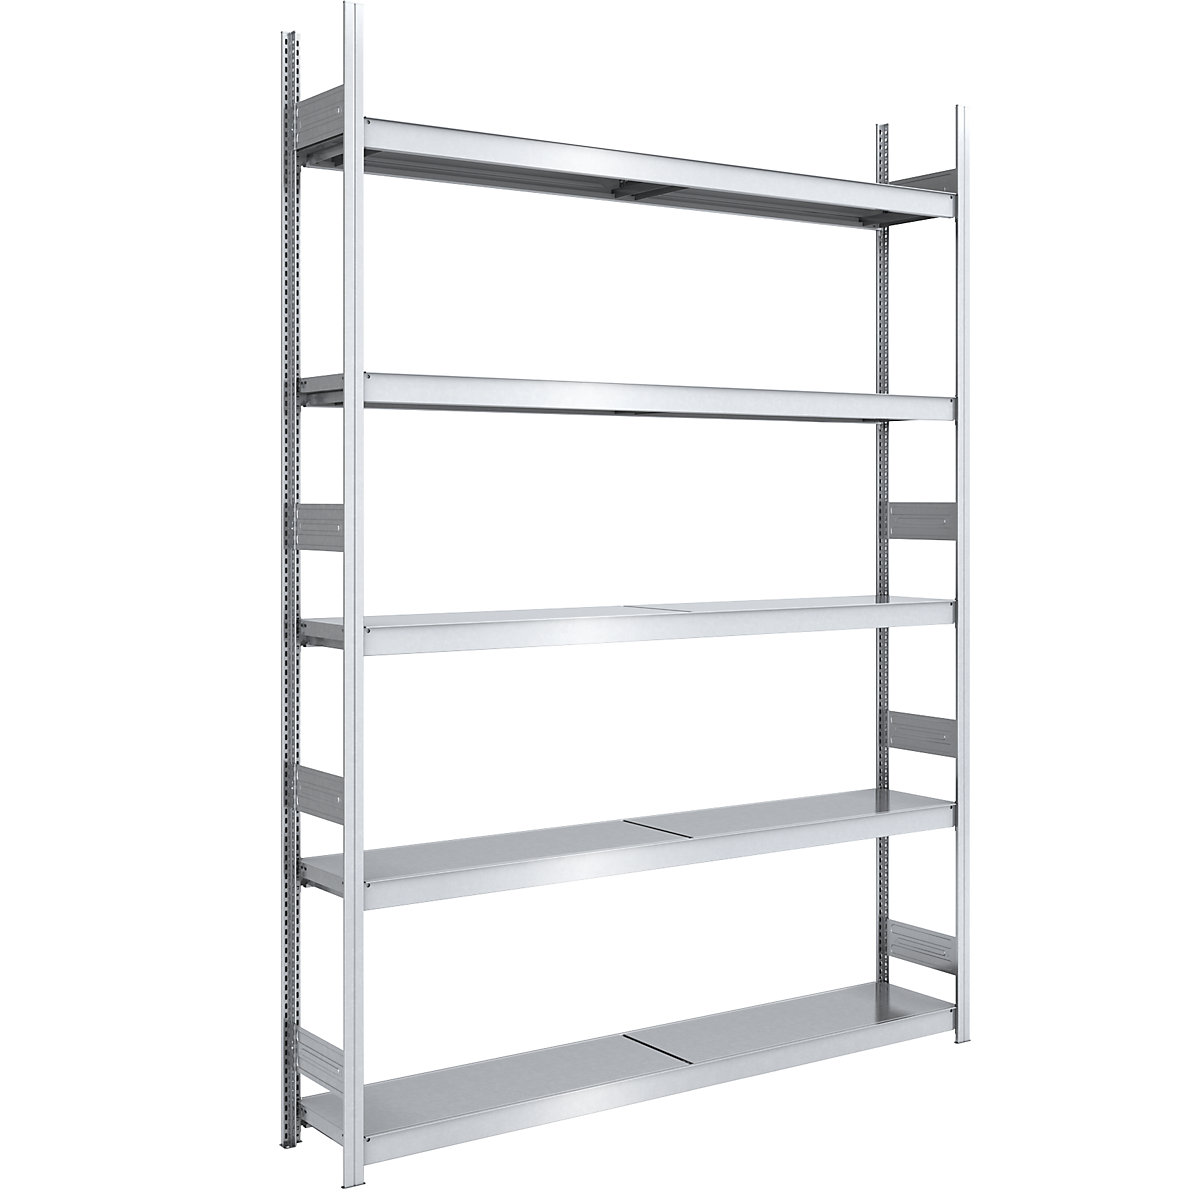 Wide span boltless shelving unit, zinc plated – hofe, shelf WxD 2000 x 400 mm, standard shelf unit, 5 steel shelves, height 3000 mm